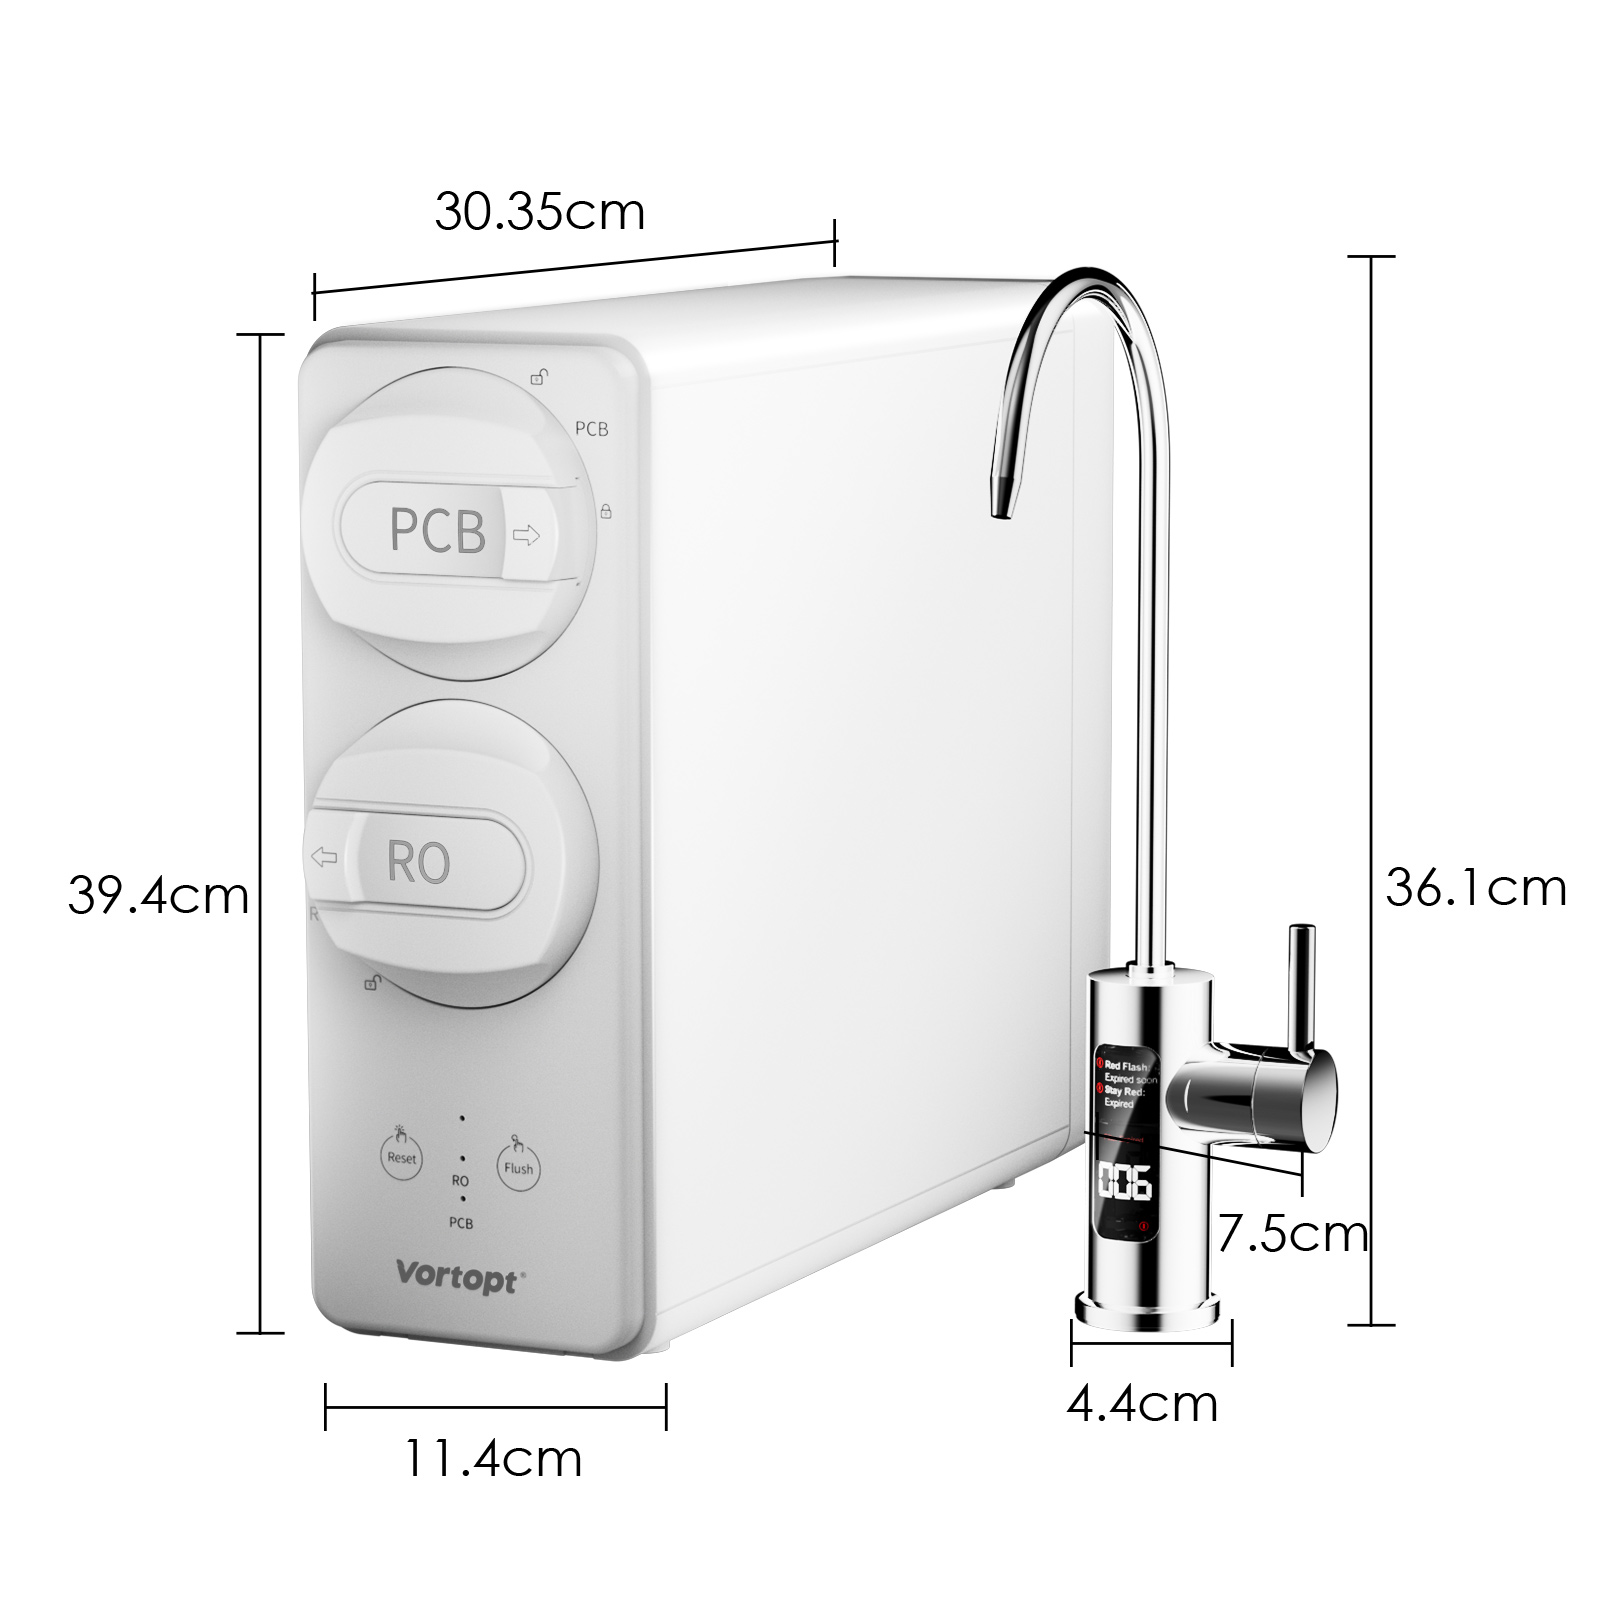  DR3 Reverse Osmosis System - 600 GPD Under Sink RO Water Filter ,Vortopt 